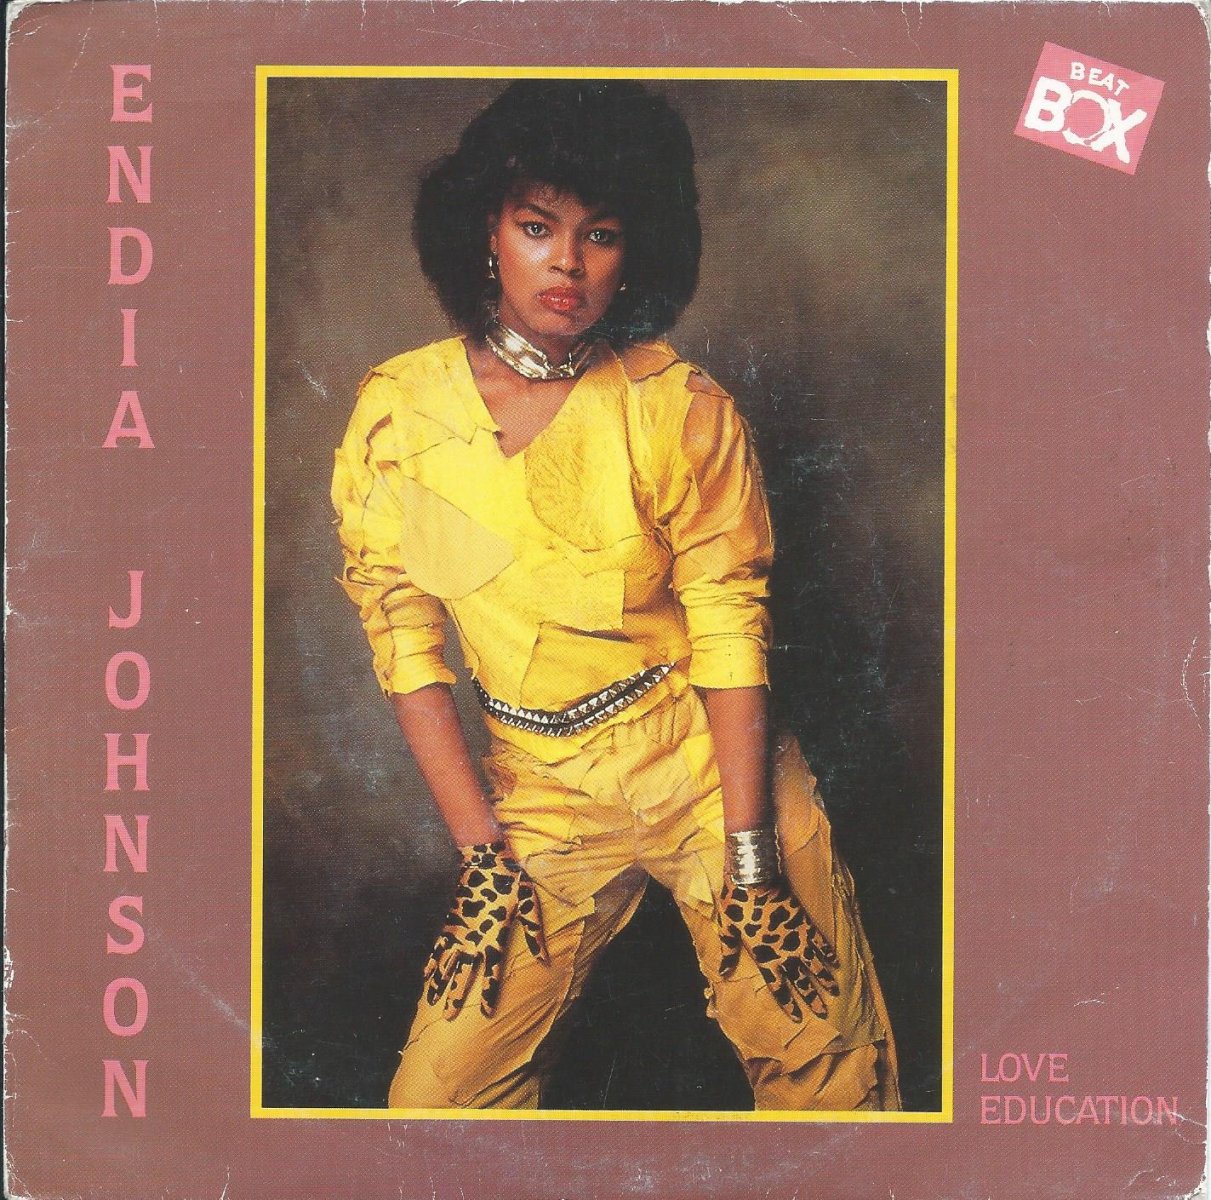 ENDIA JOHNSON / LOVE EDUCATION (7